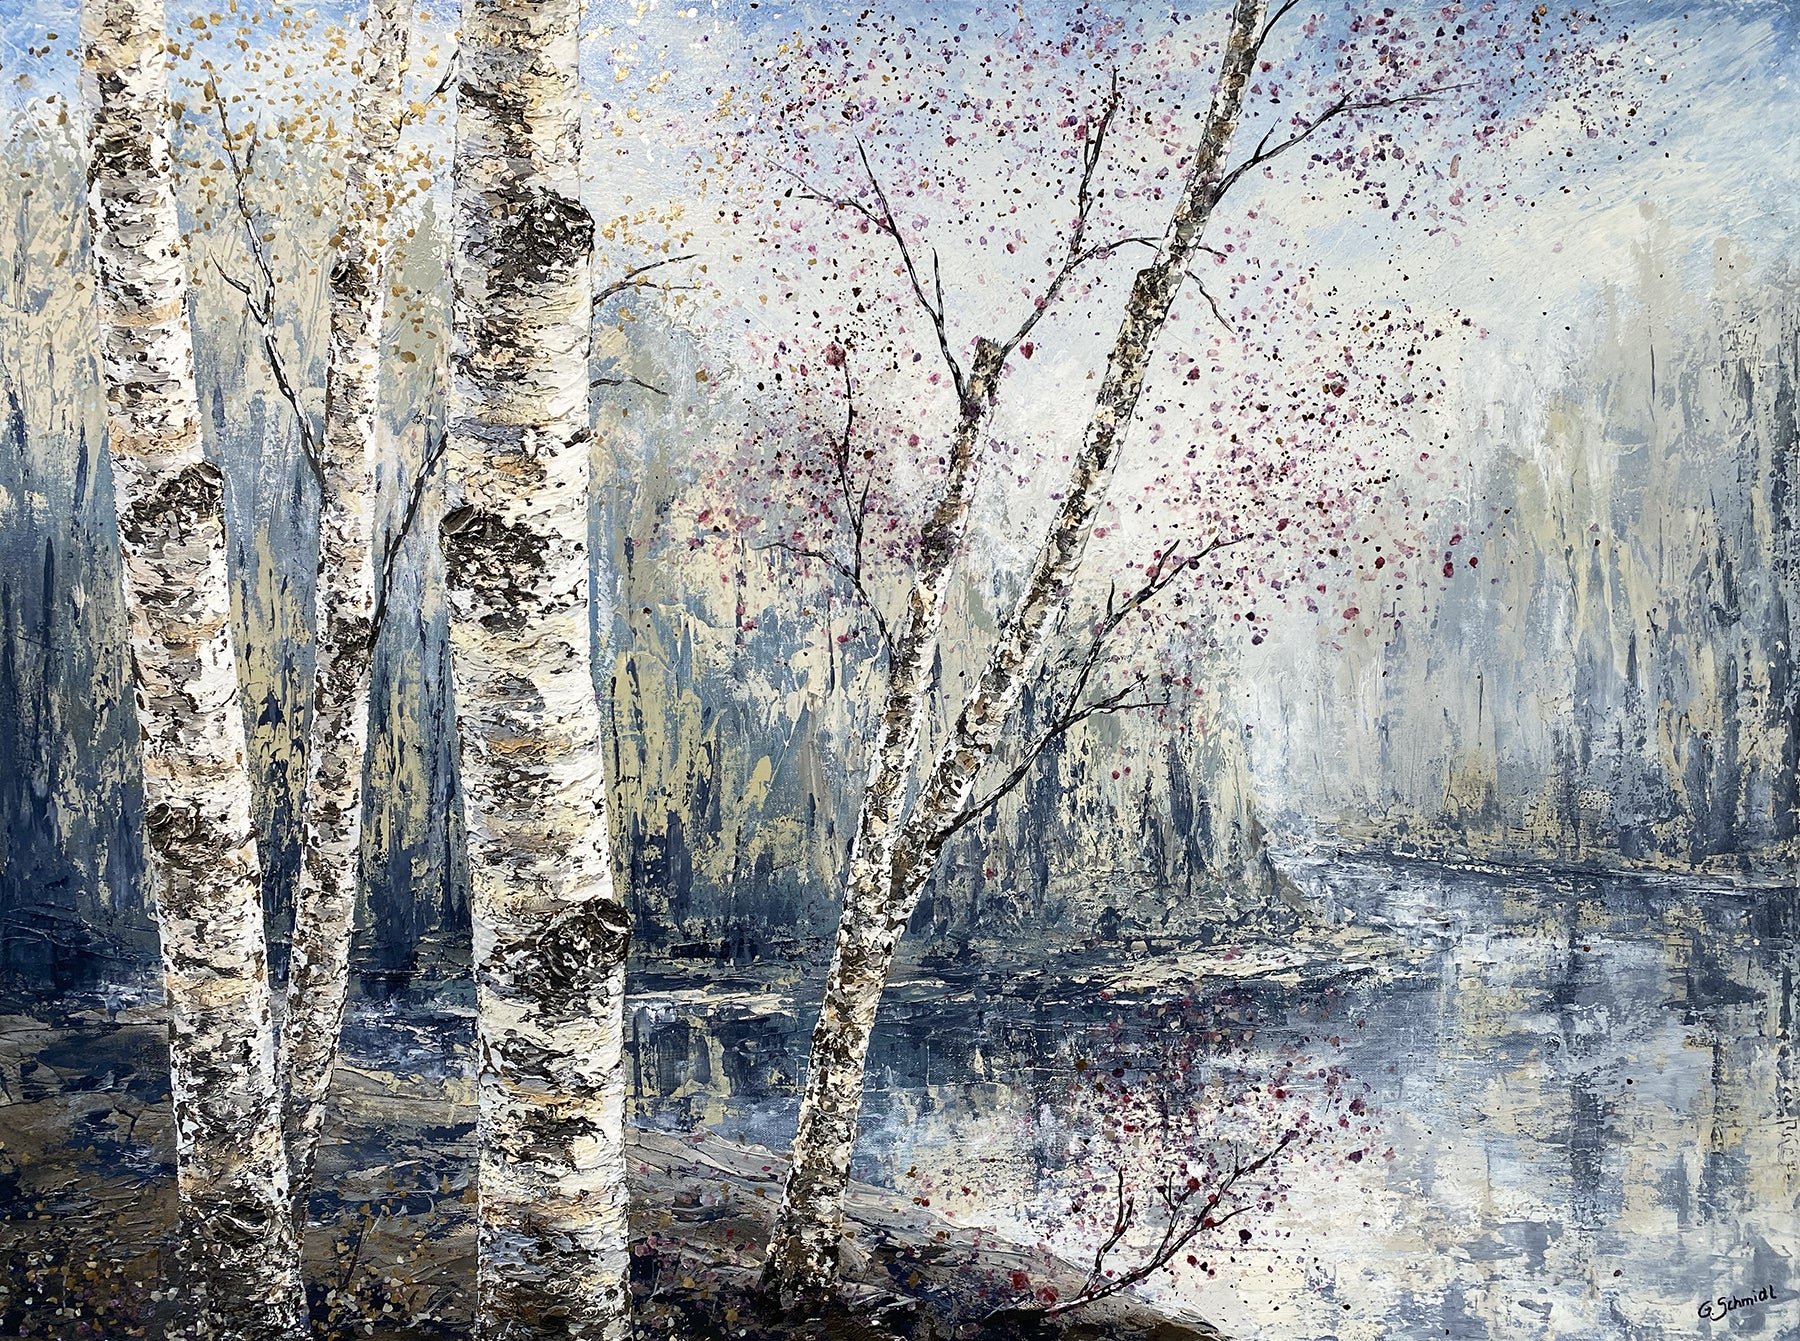 Morning has Broken. A birch tree painting by Michigan artist Gerd Schmidt.